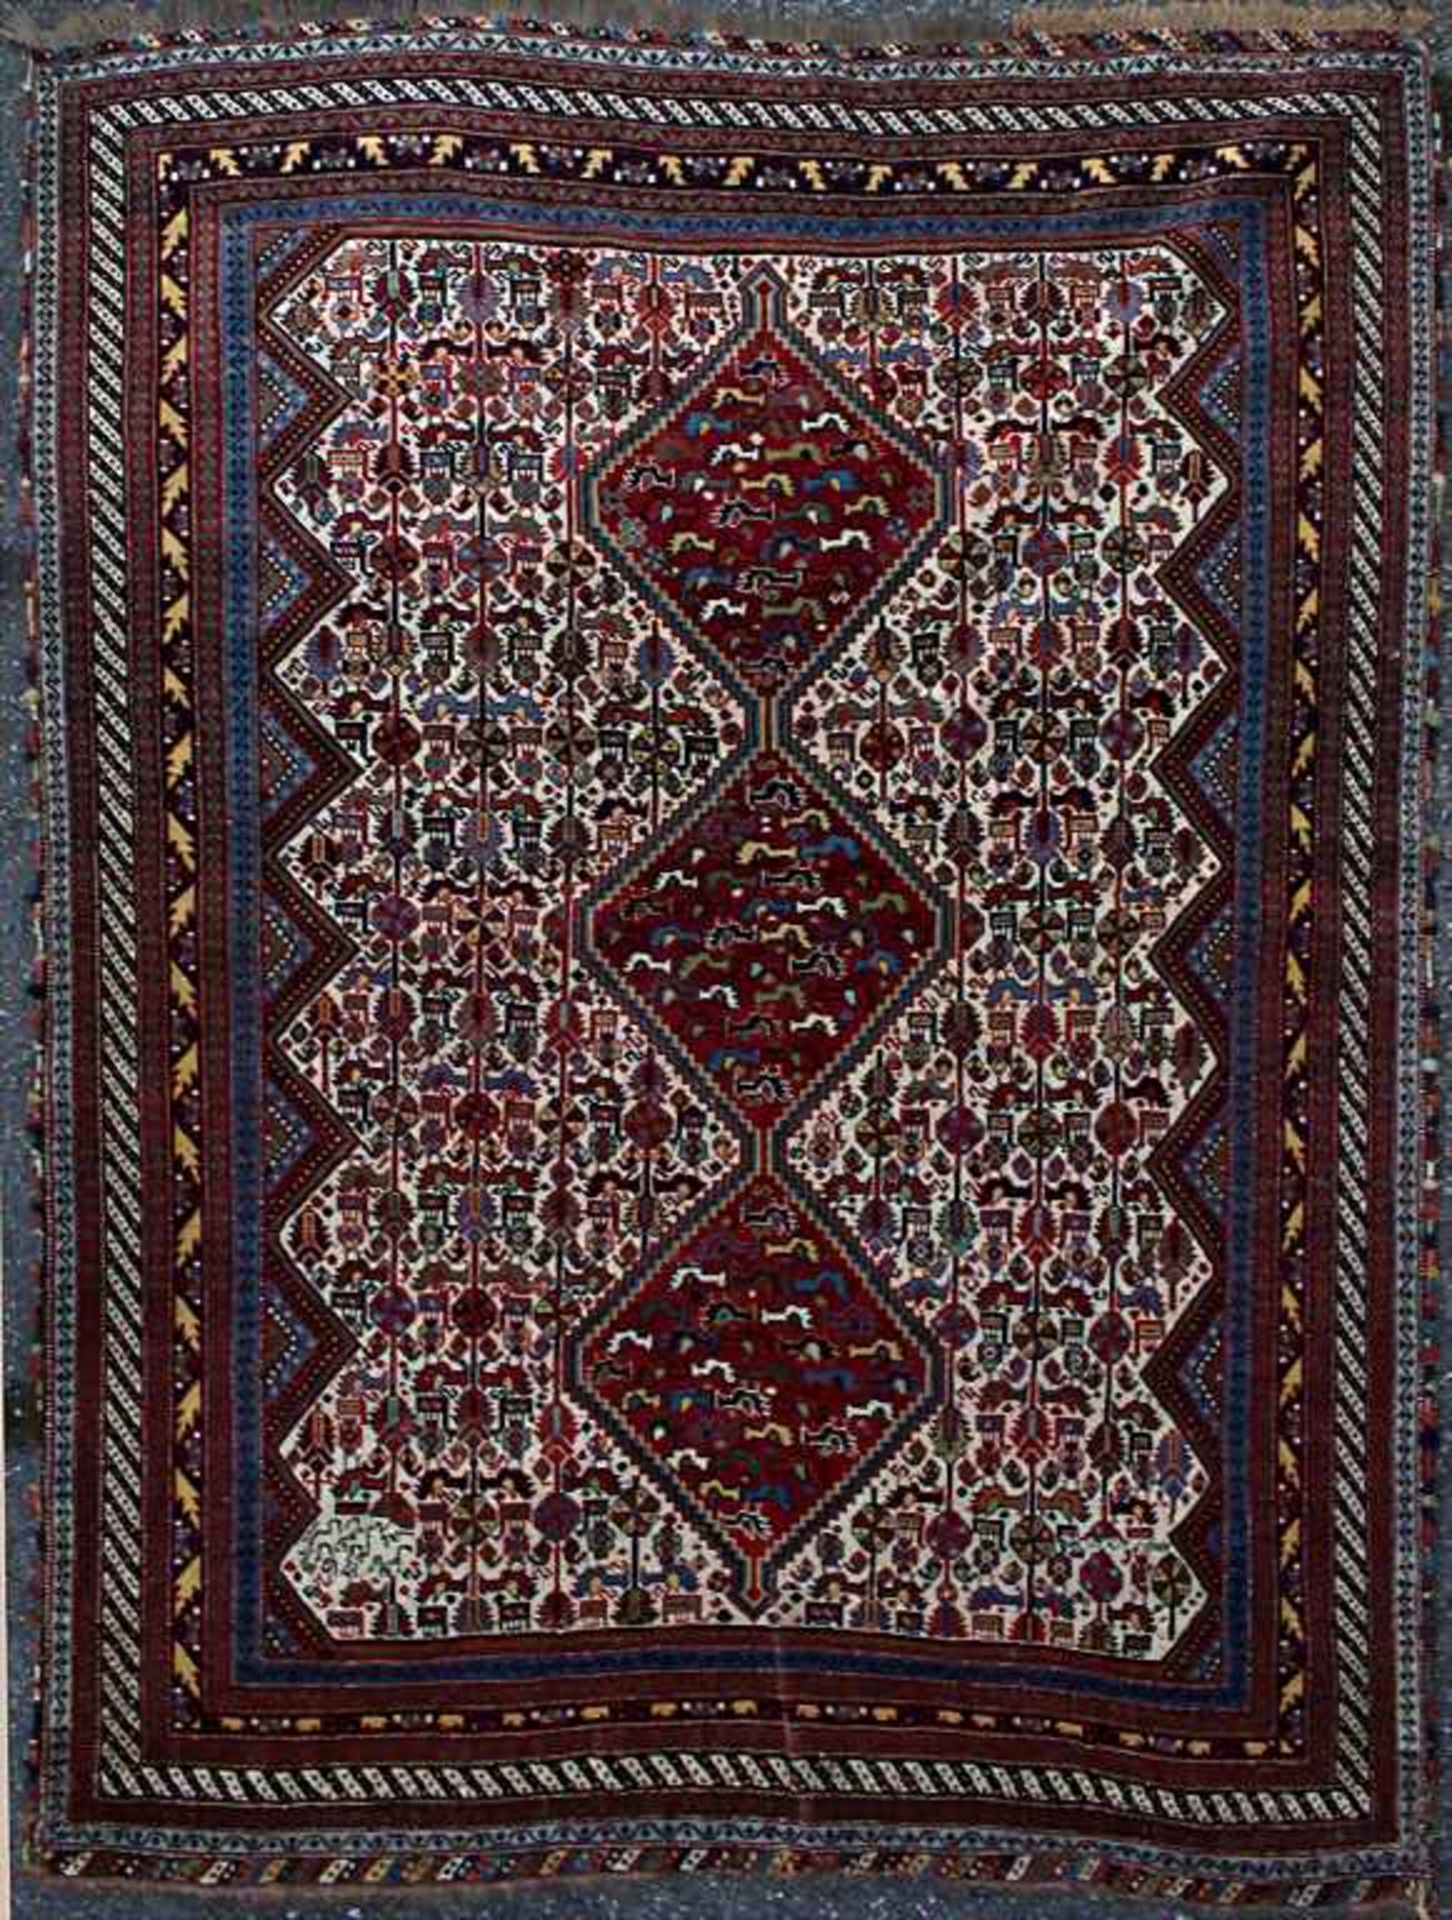 Orientteppich / An oriental carpetMaterial: Wolle auf Wolle, Signatur: oben rechts signiert, Maße: